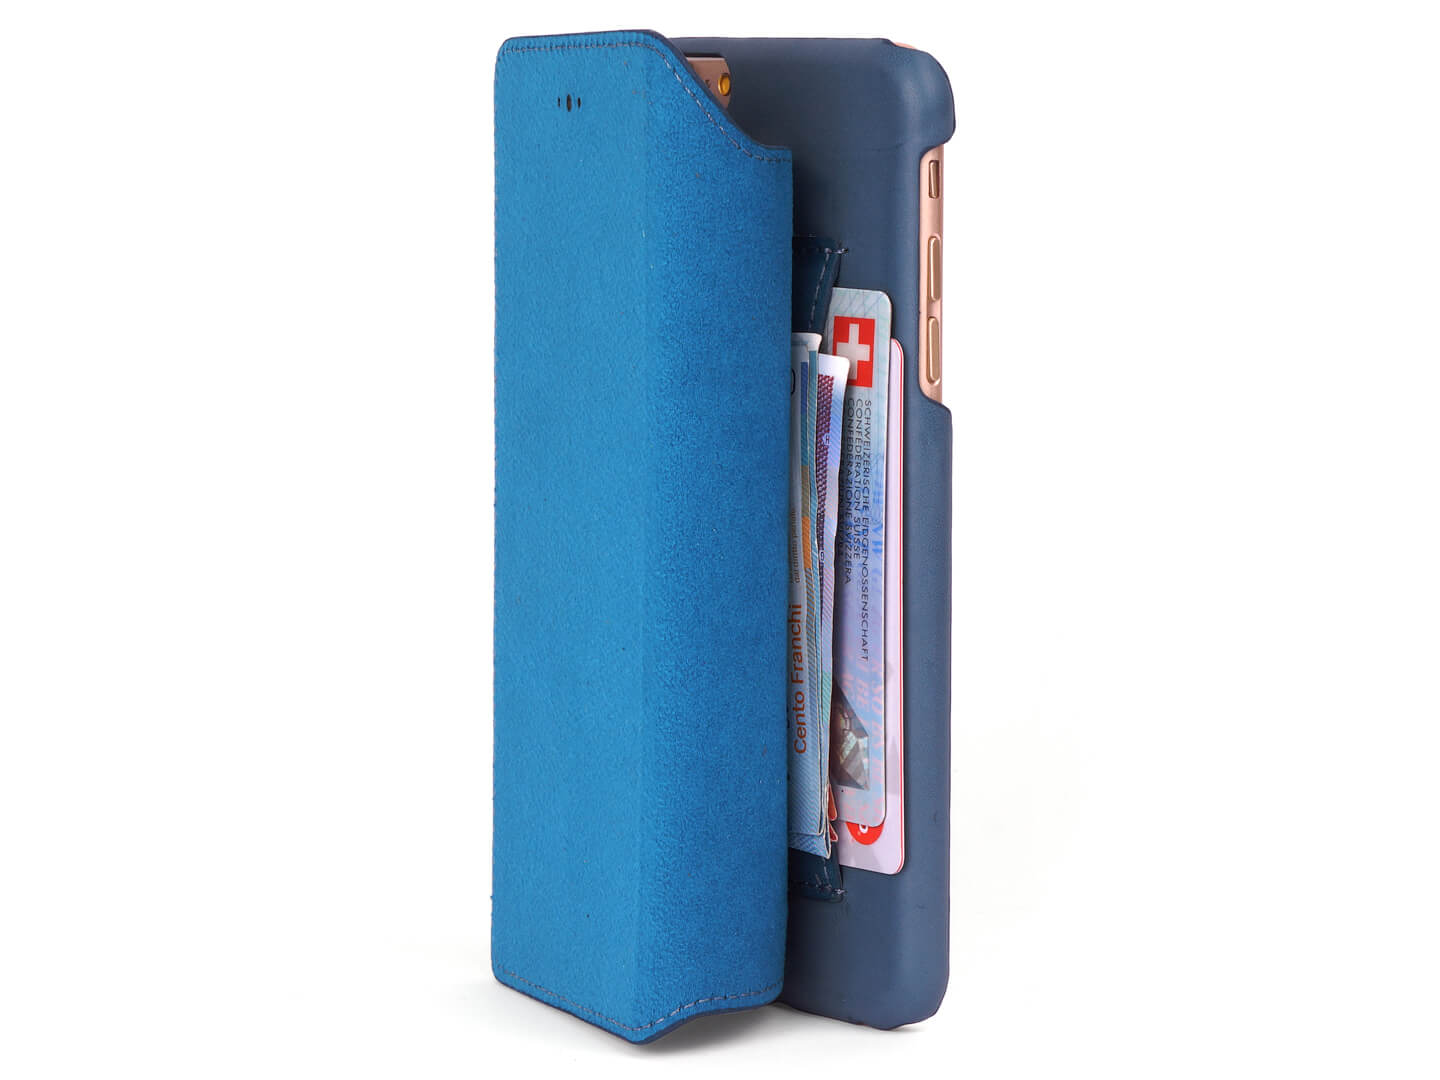 iPhone 6 Plus blue leather wallet case - Carapaz